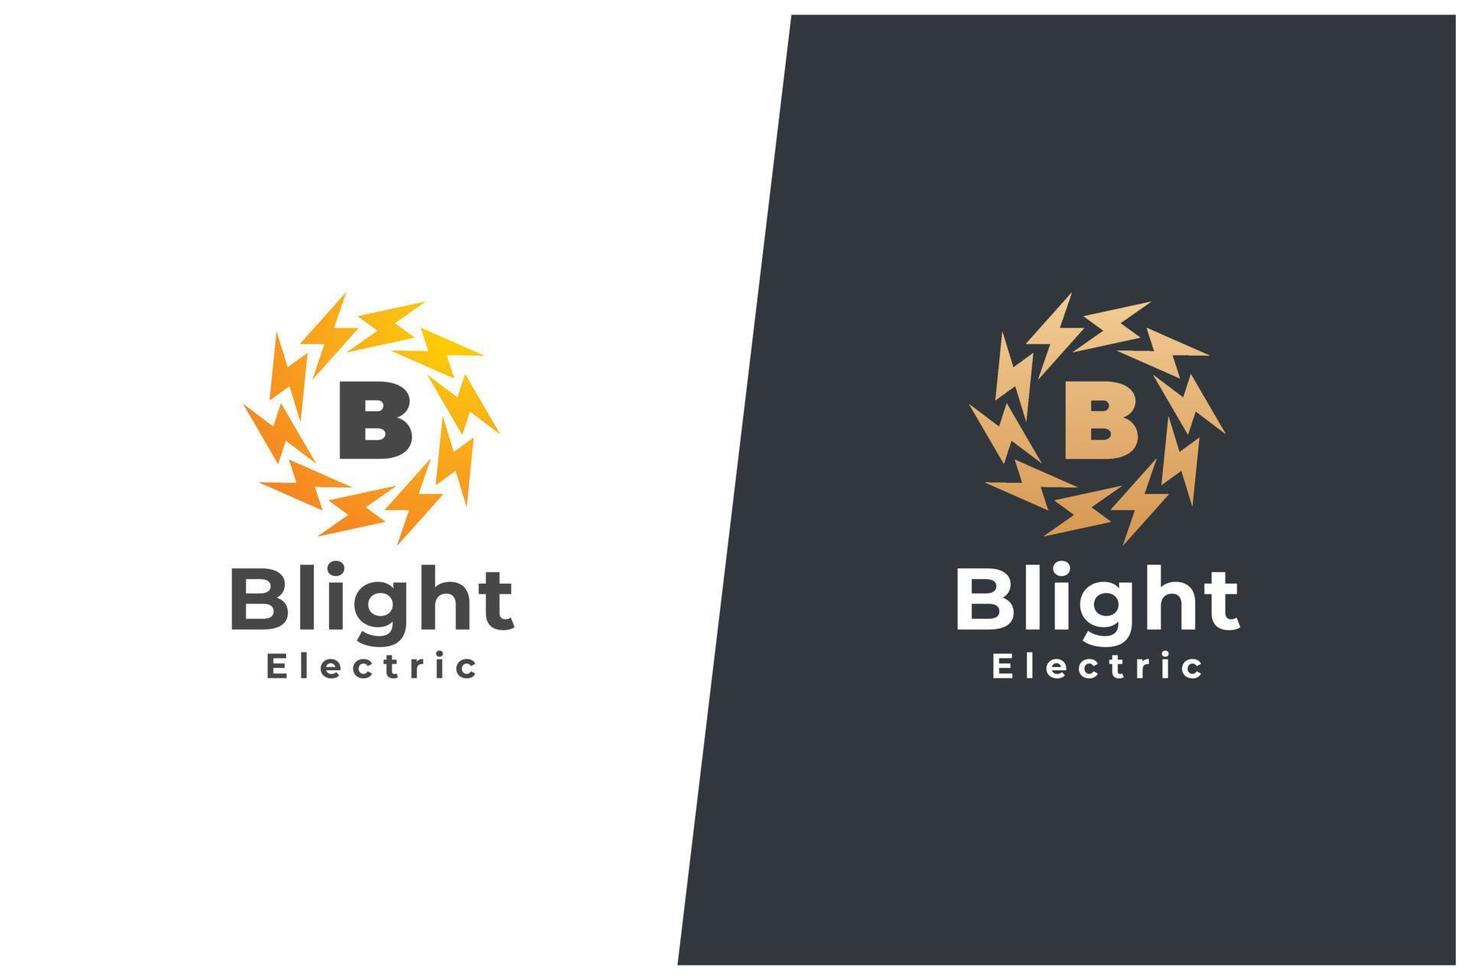 B Letter Logo Vector Concept Icon Trademark. Universal B Logotype Brand